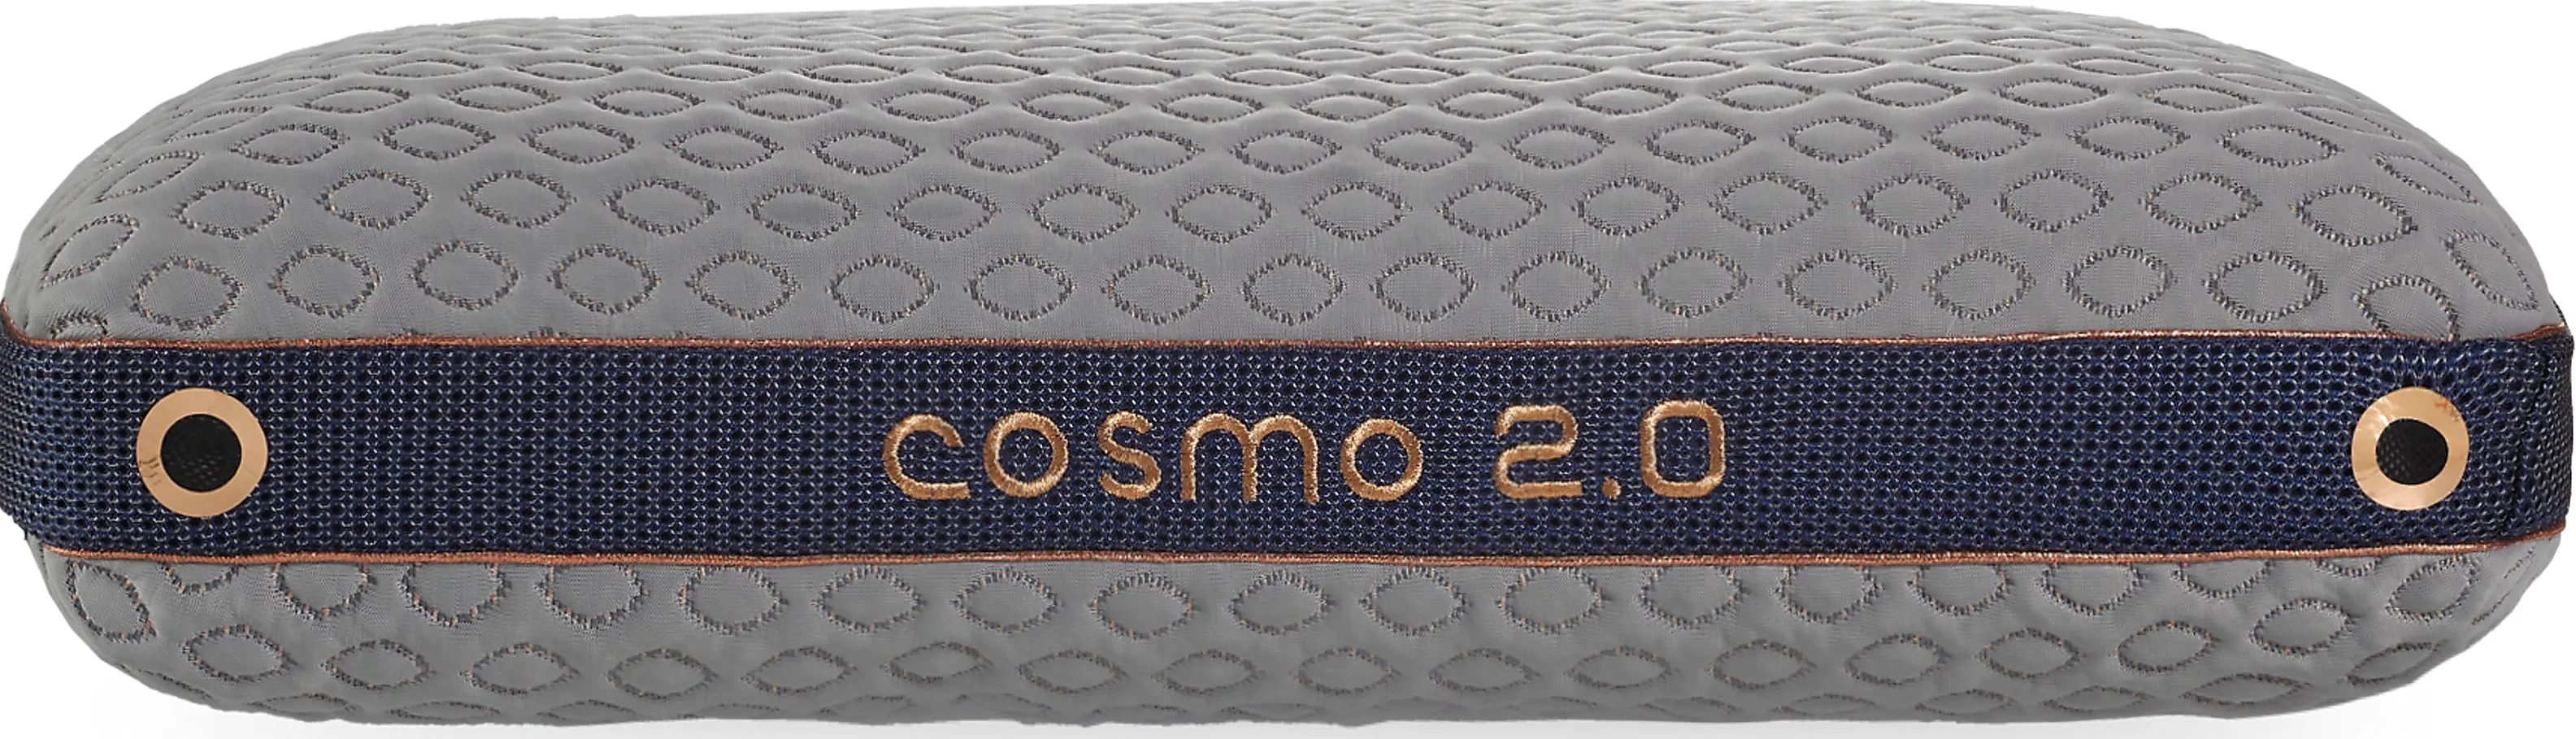 Bedgear Cosmo Performance 2.0 Standard Pillow